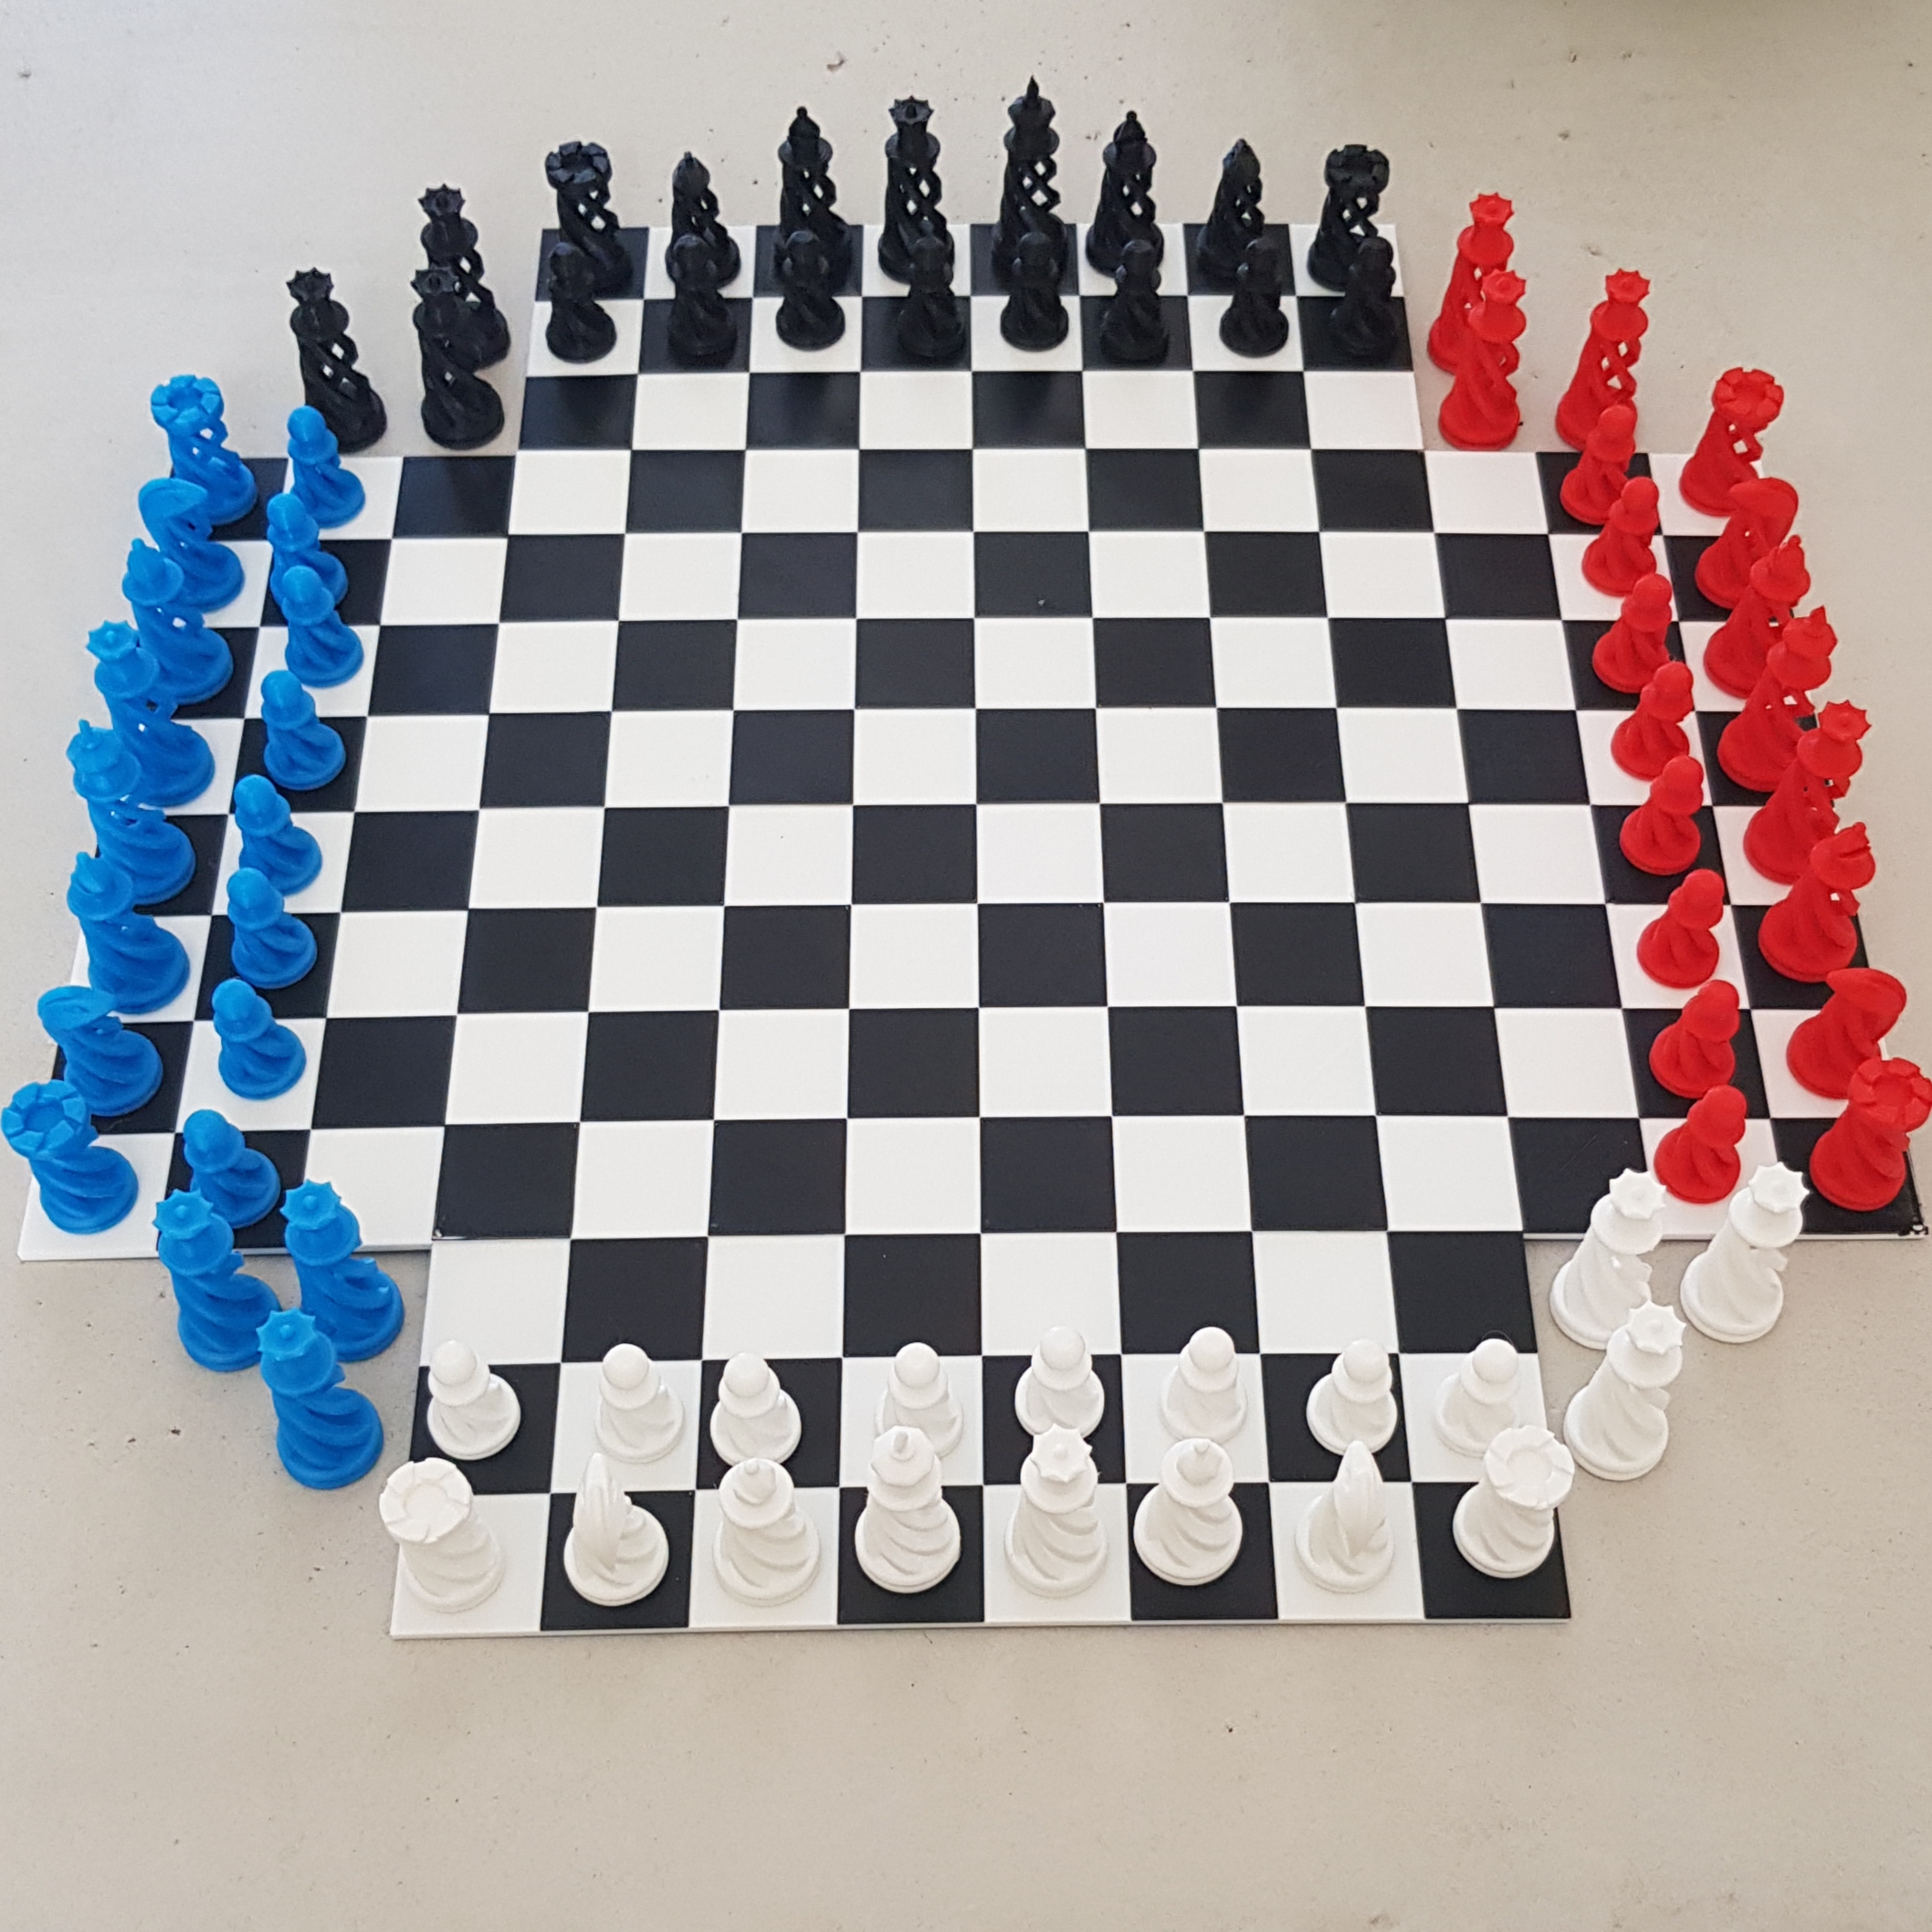 4 Player chessboard